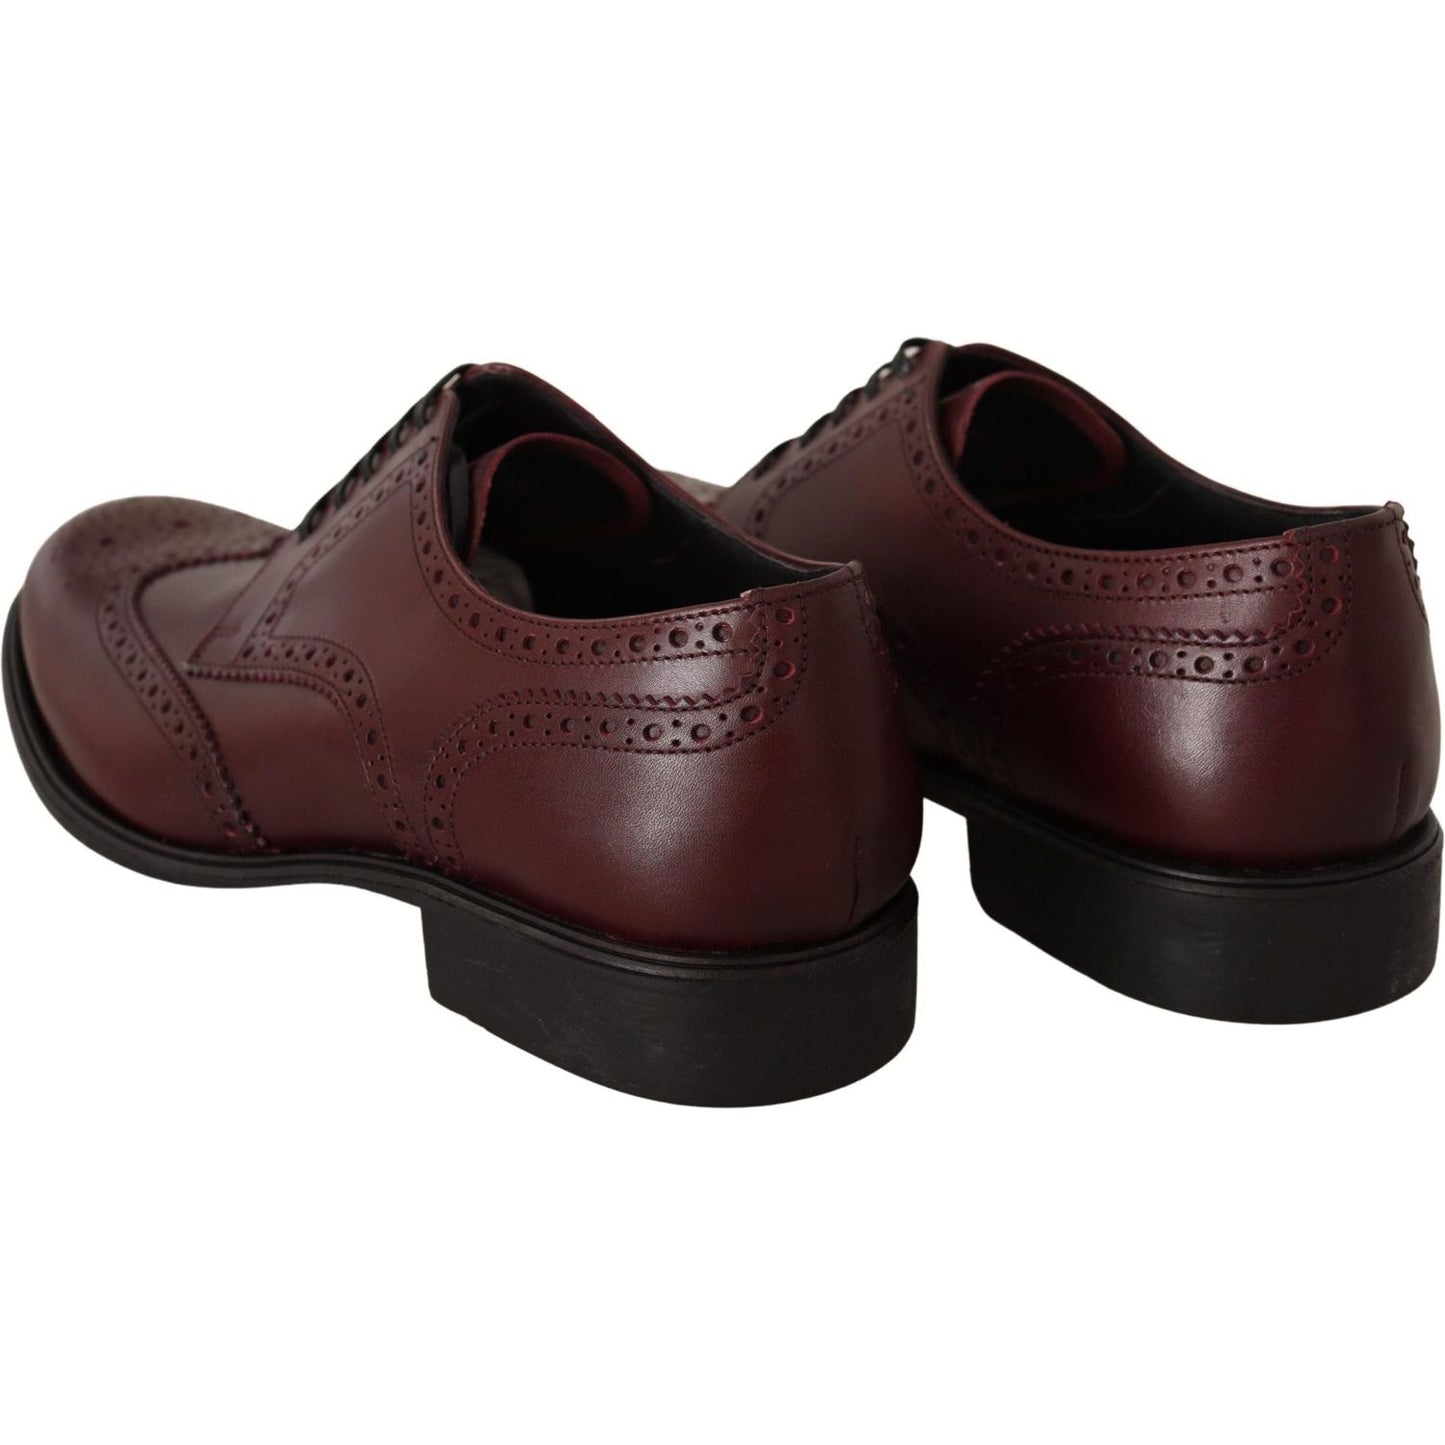 Dolce & Gabbana Elegant Bordeaux Leather Derby Shoes bordeaux-leather-oxford-wingtip-formal-shoes IMG_4868-scaled-4cd9b436-7bd.jpg